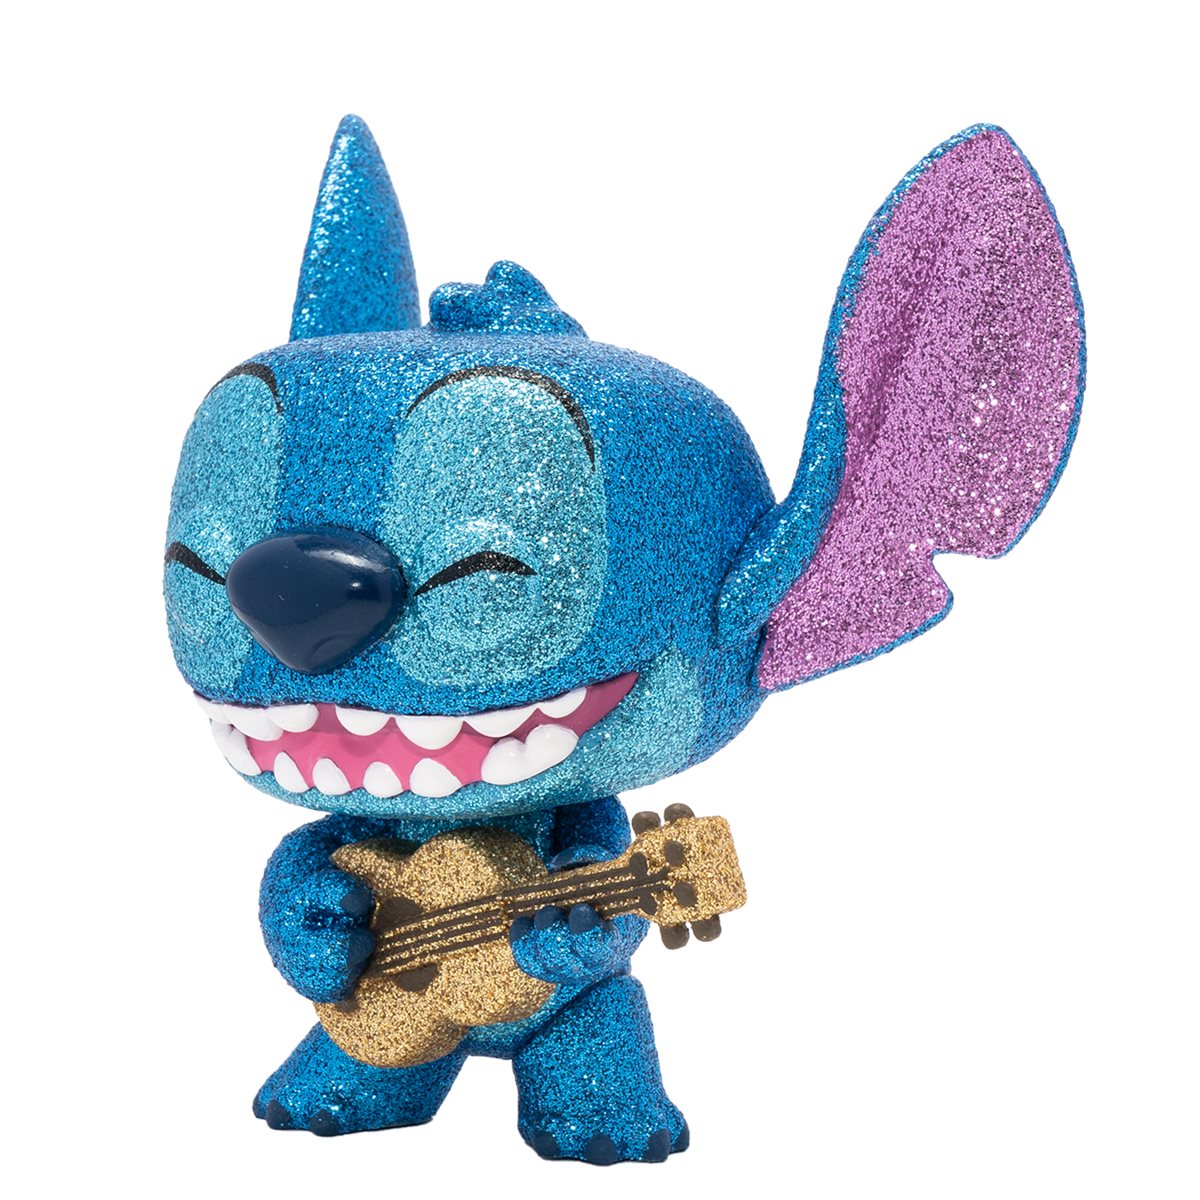 Funko Pop! Disney: Lilo & Stitch - Stitch (Diamond Glitter Exclusive) #159